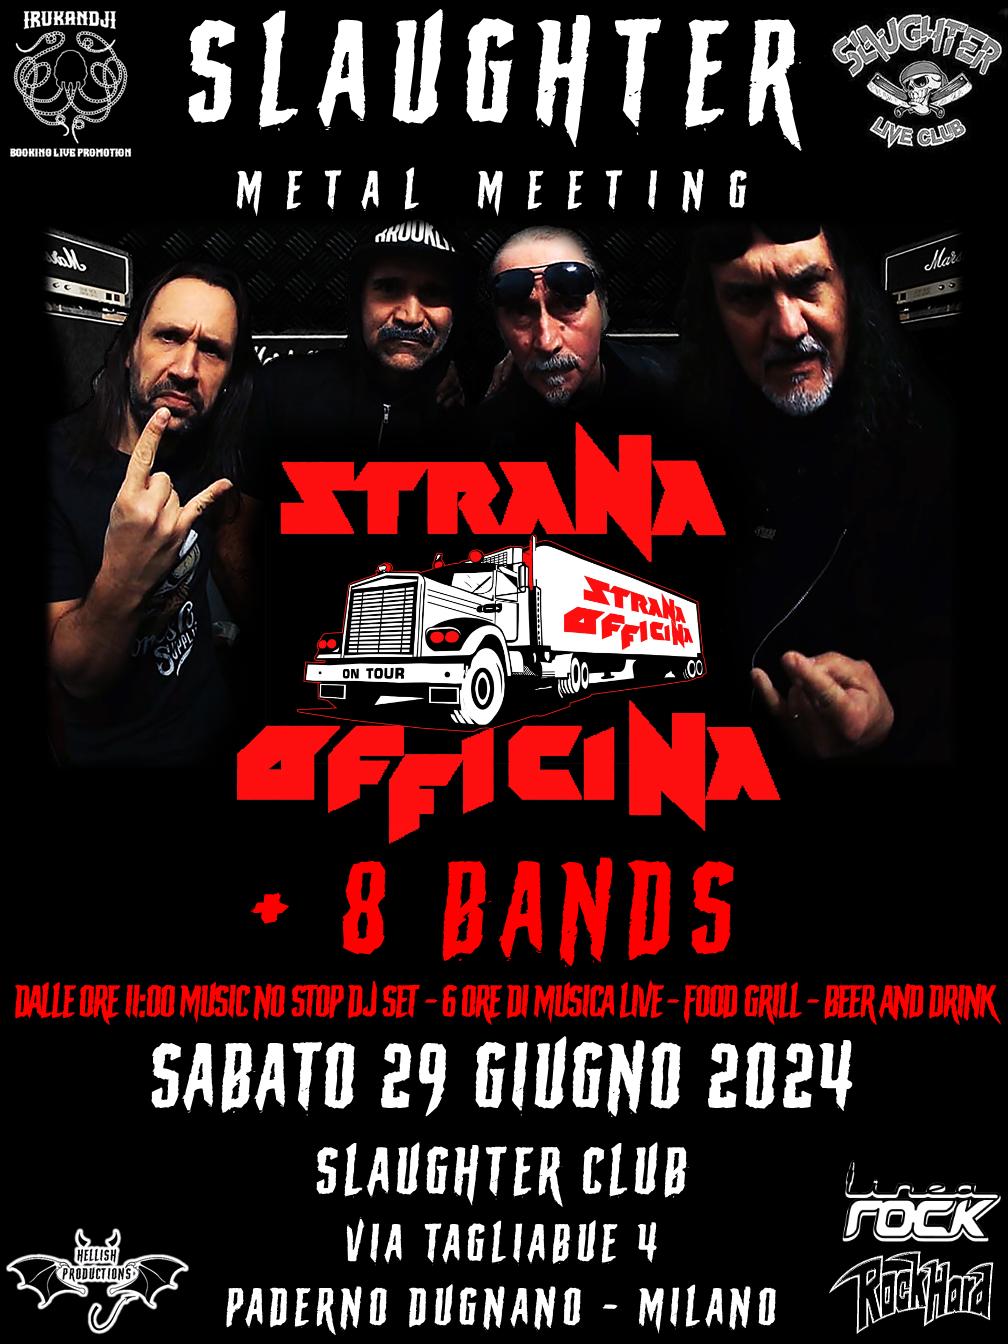 Slaughter Metal Meeting: Strana Officina + 8 Bands.